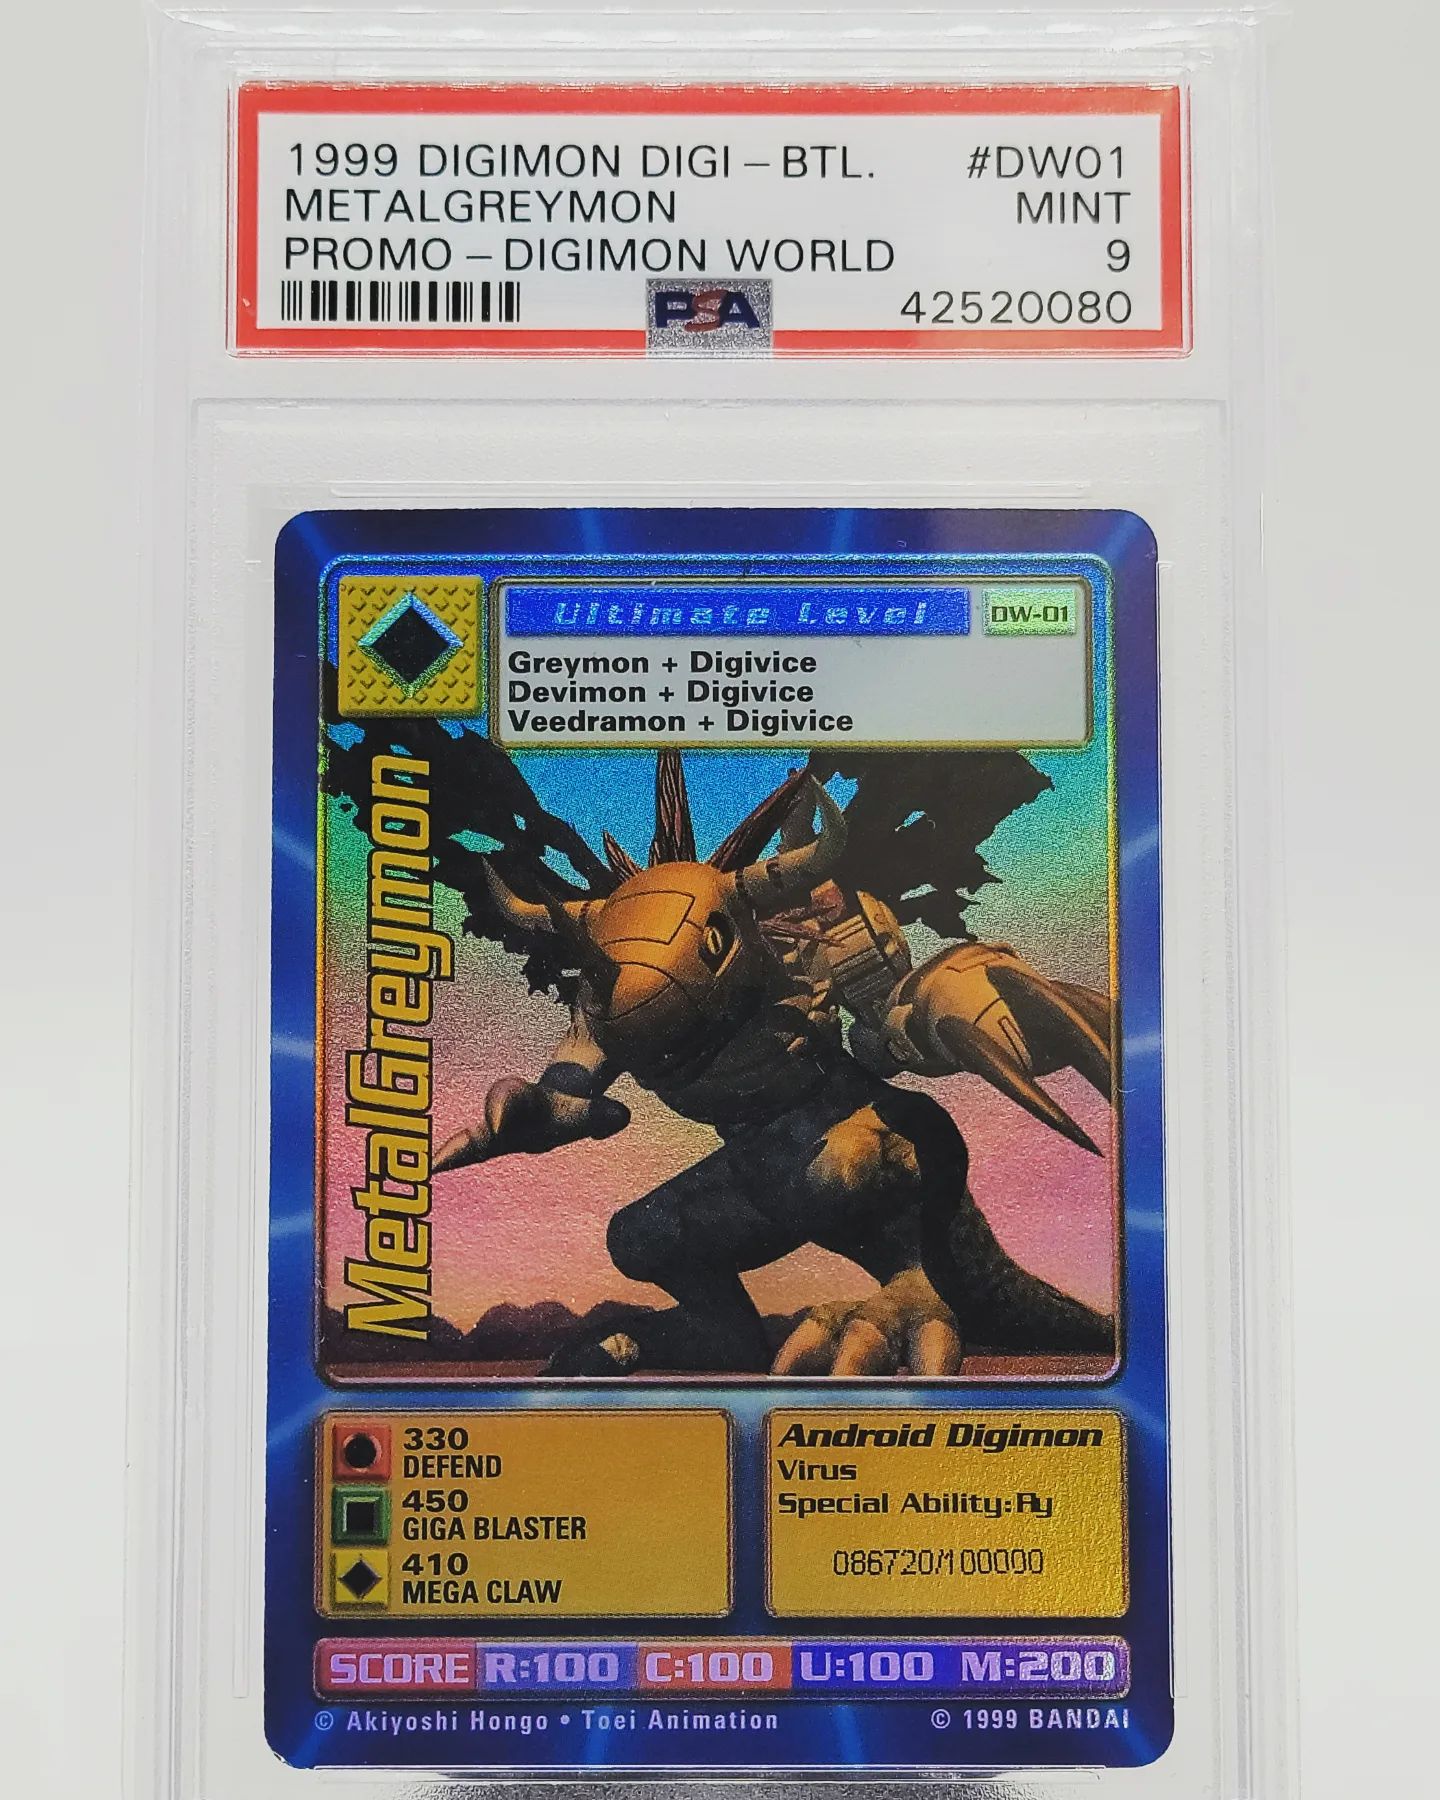 Digimon World PlayStation Promo DW-01 MetalGreymon - number 086720 / 100,000